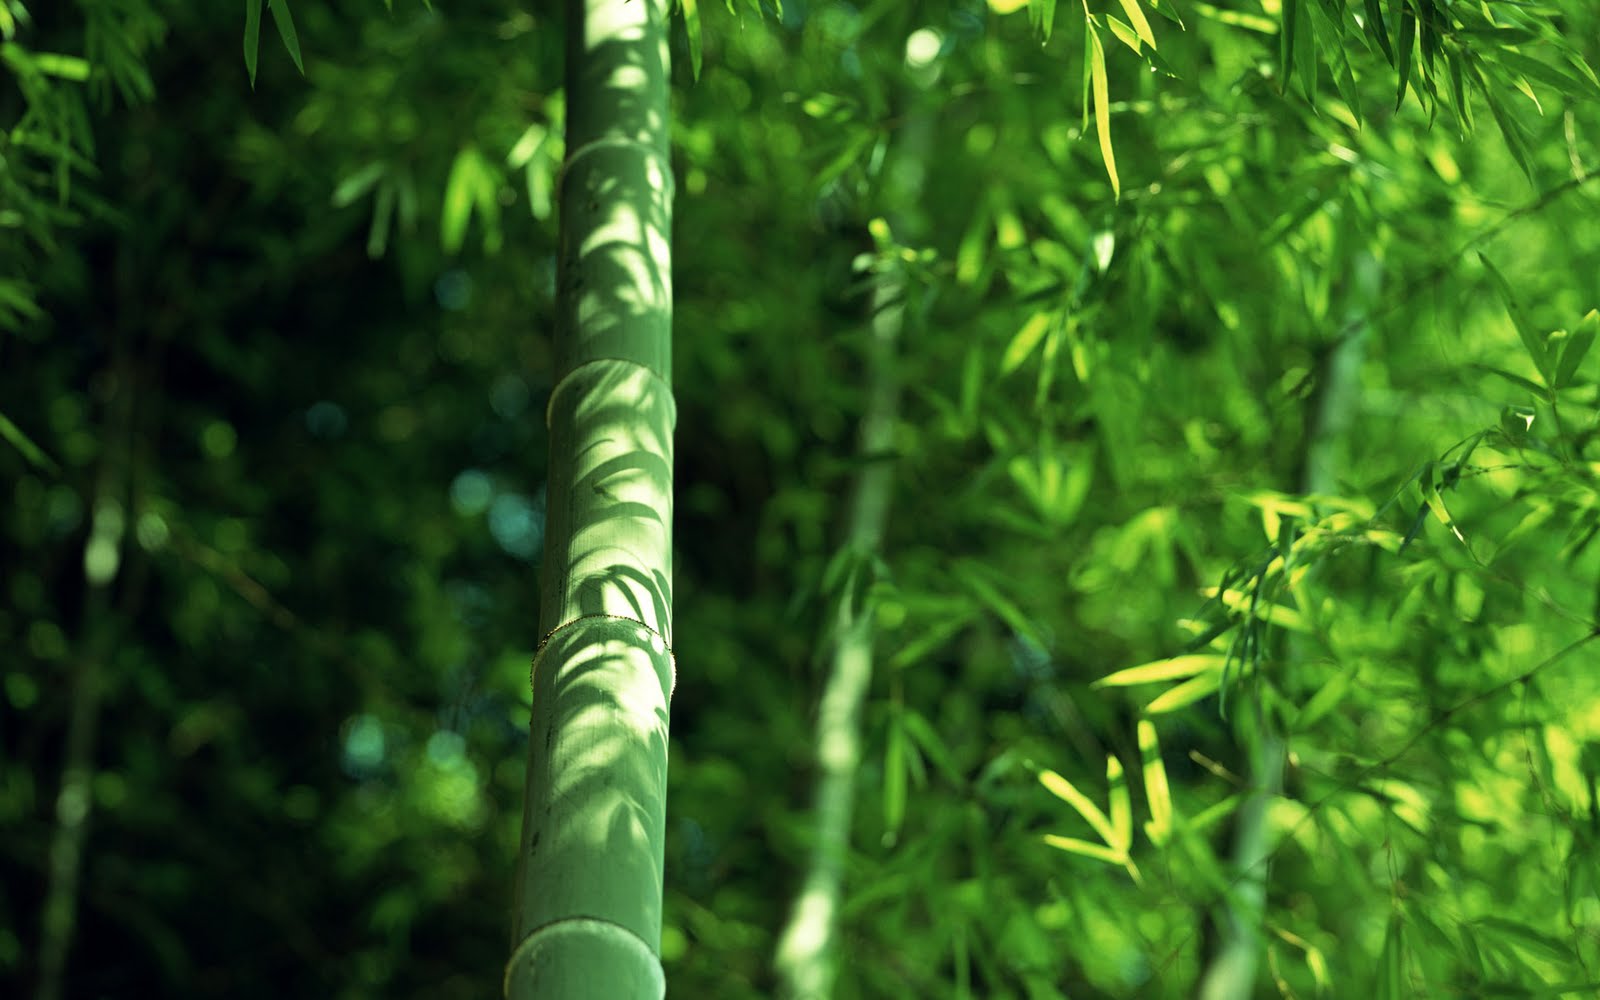 Forest High Definition bamboo design wallpaper bamboo pattern 1600x1000